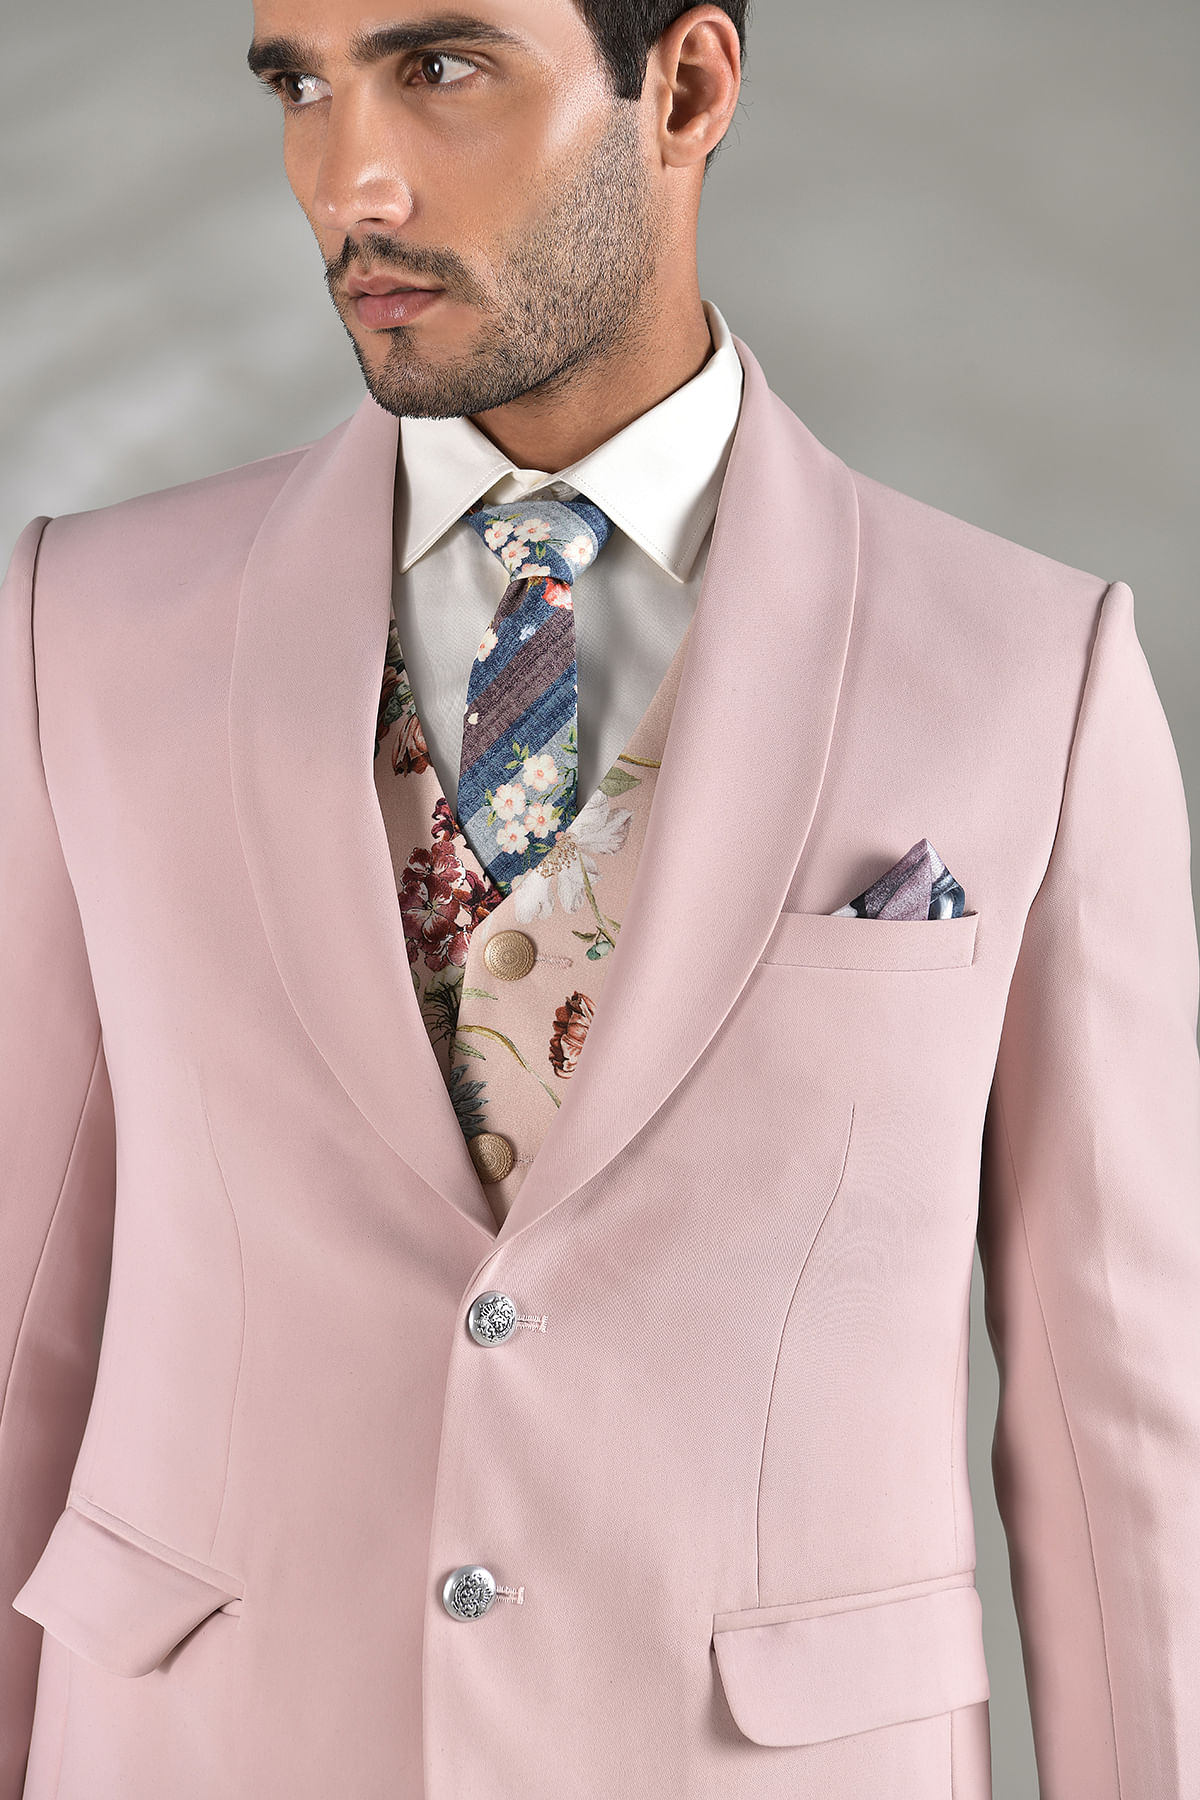 Buy Chalk Pink Woven Italian Classic Suit Online